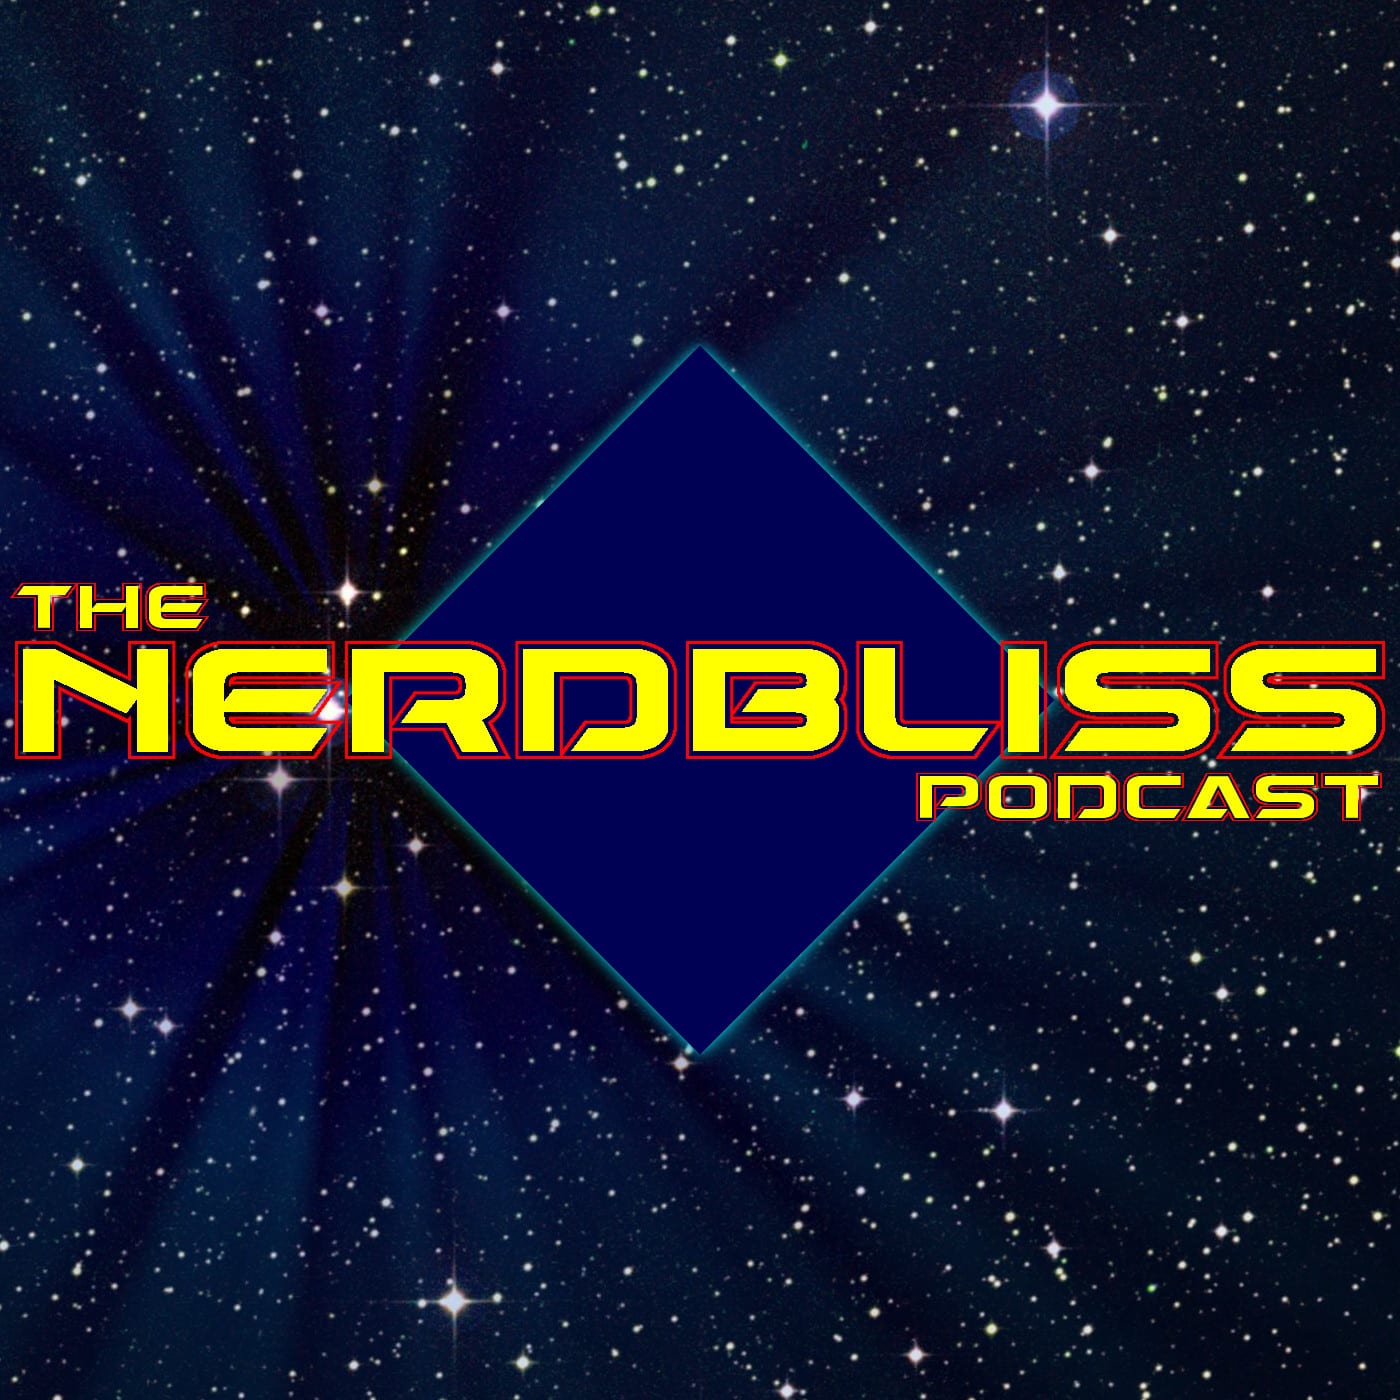 The Nerdbliss Podcast